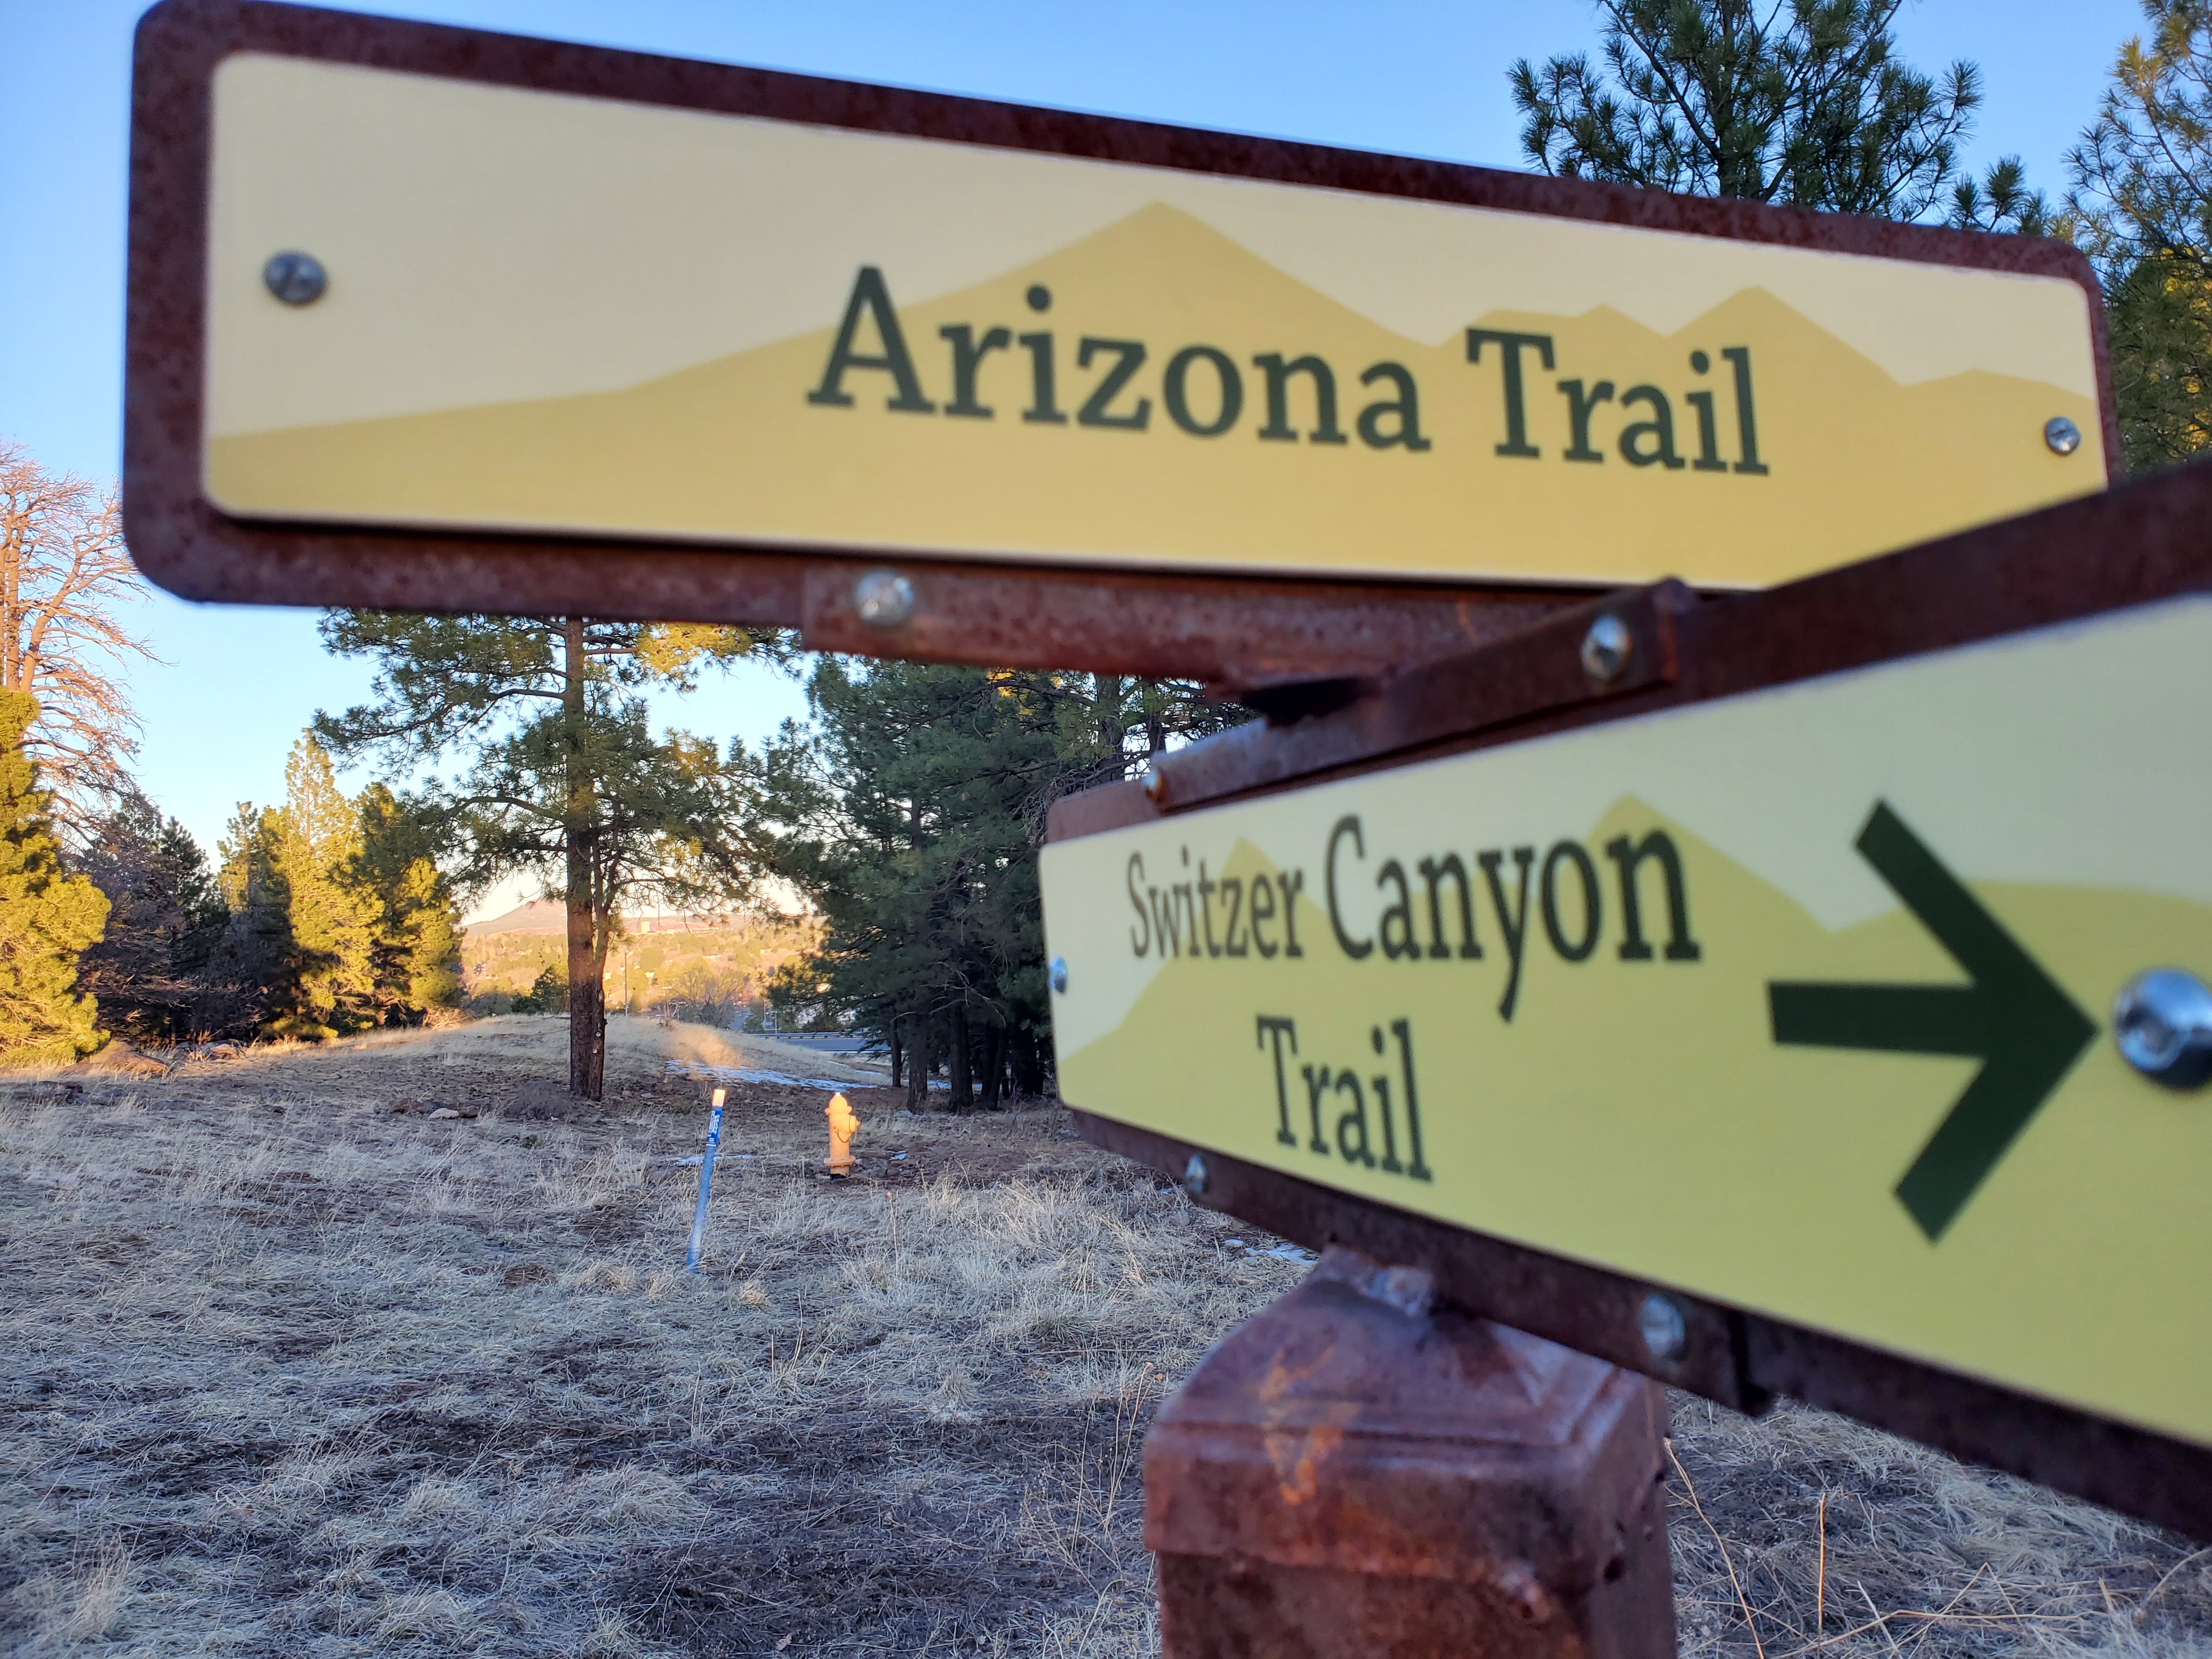 Sign post for Arizona Trail